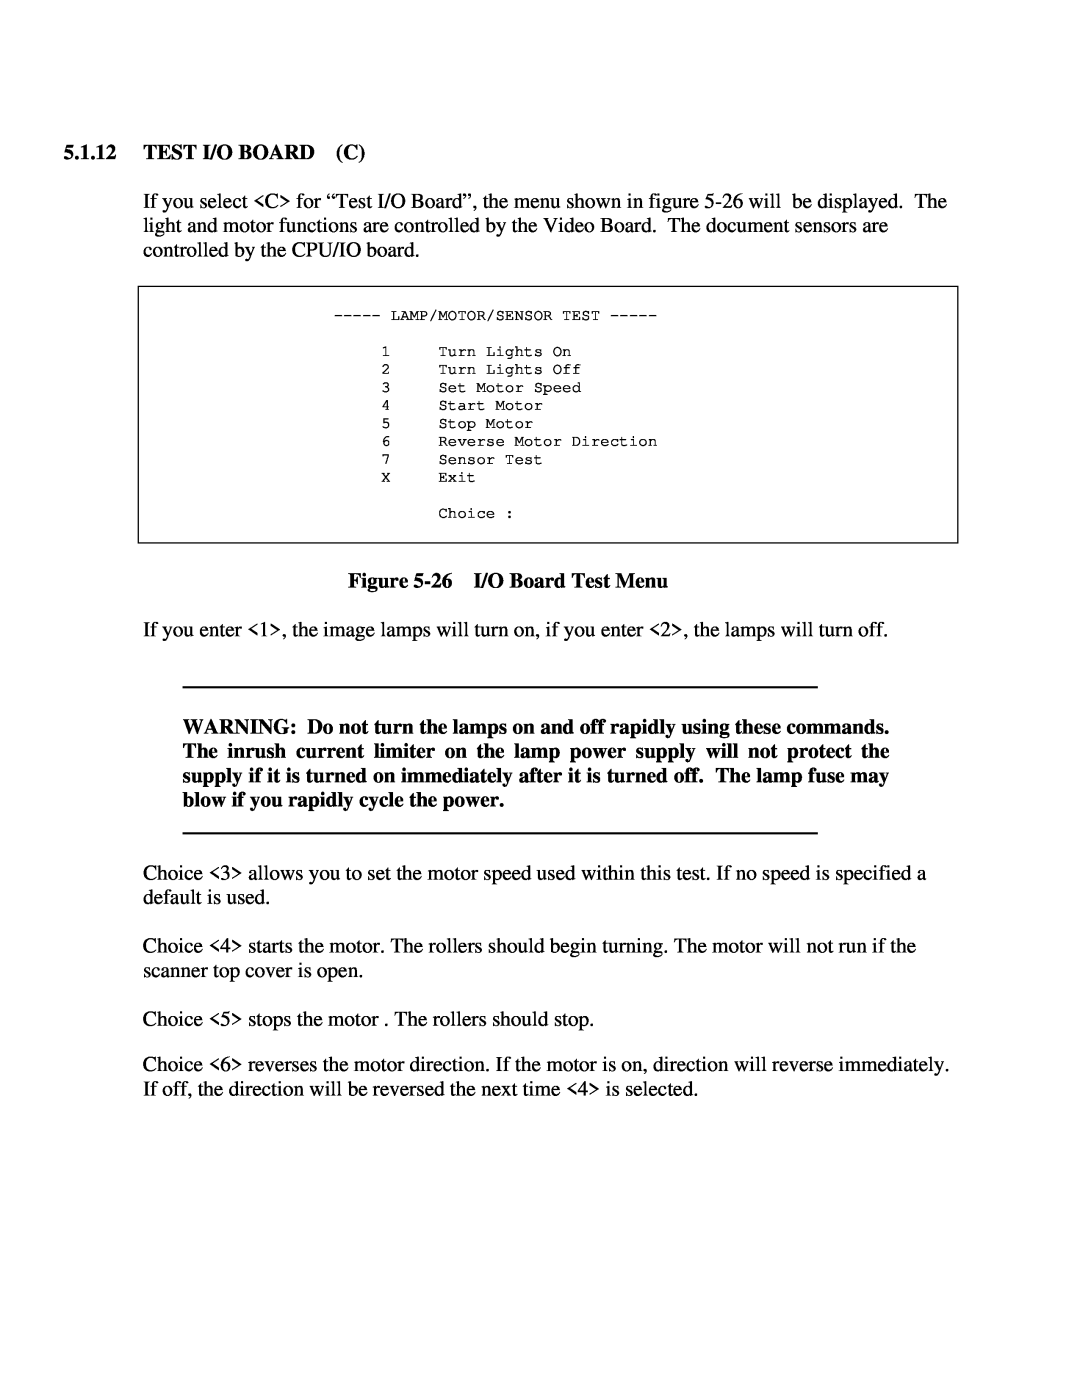 IBM CF Series manual Test I/O Board C, 26 I/O Board Test Menu 